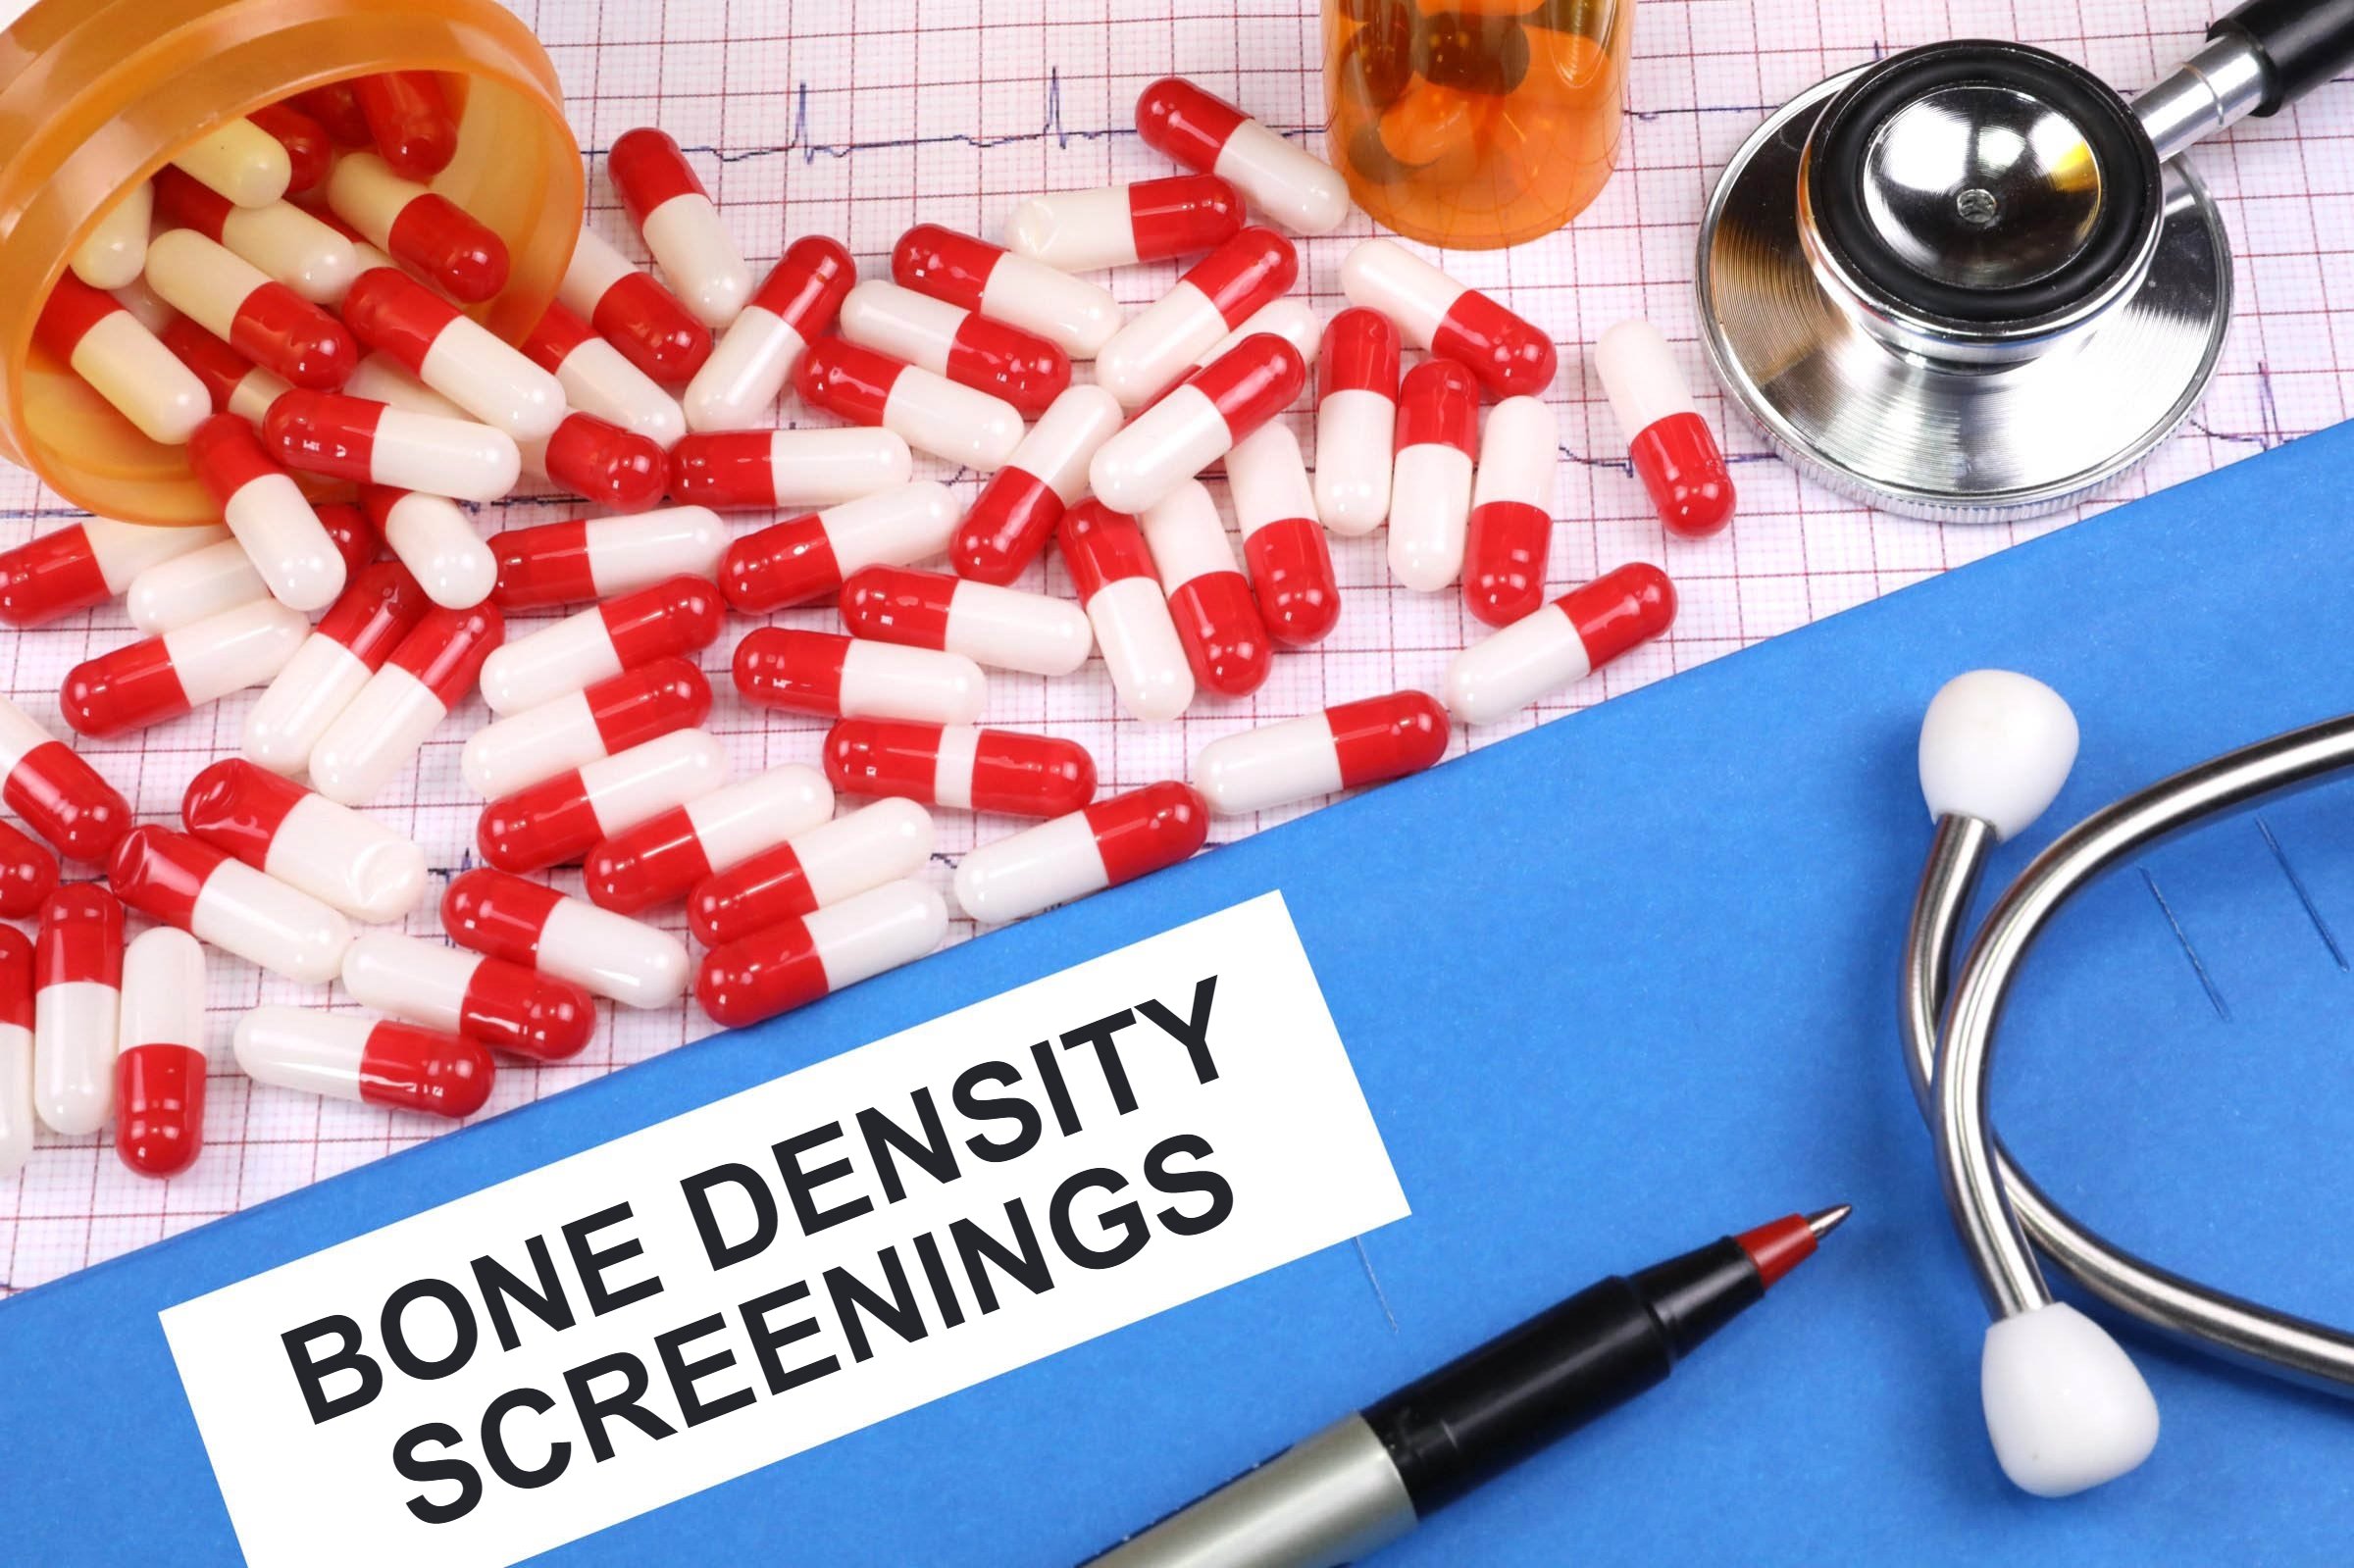 bone density screenings